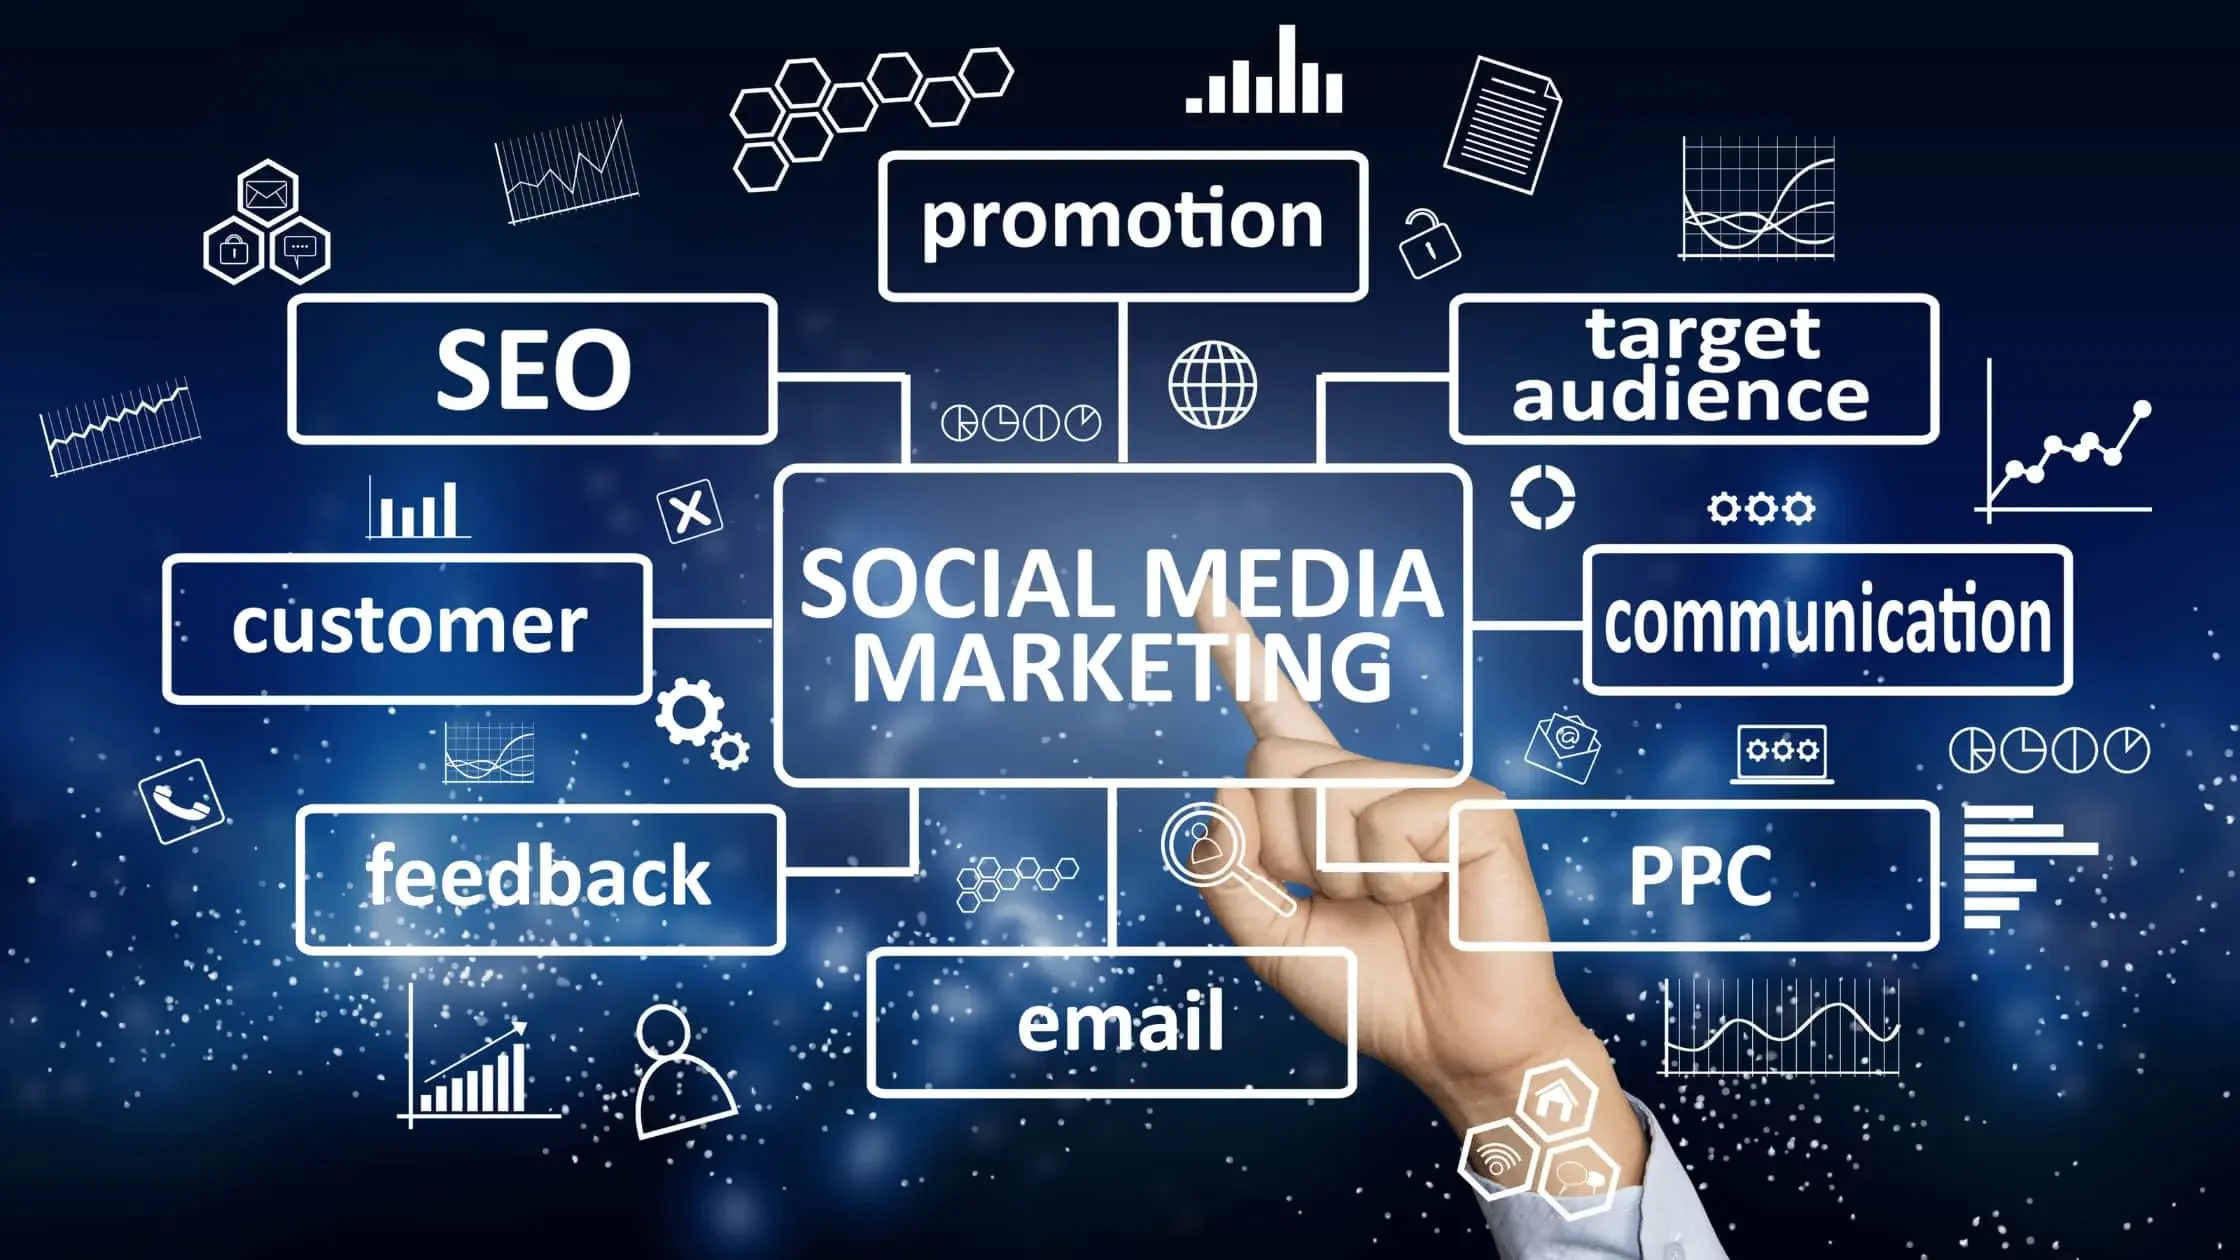 Social media marketing for B2B companies – A beginner’s guide